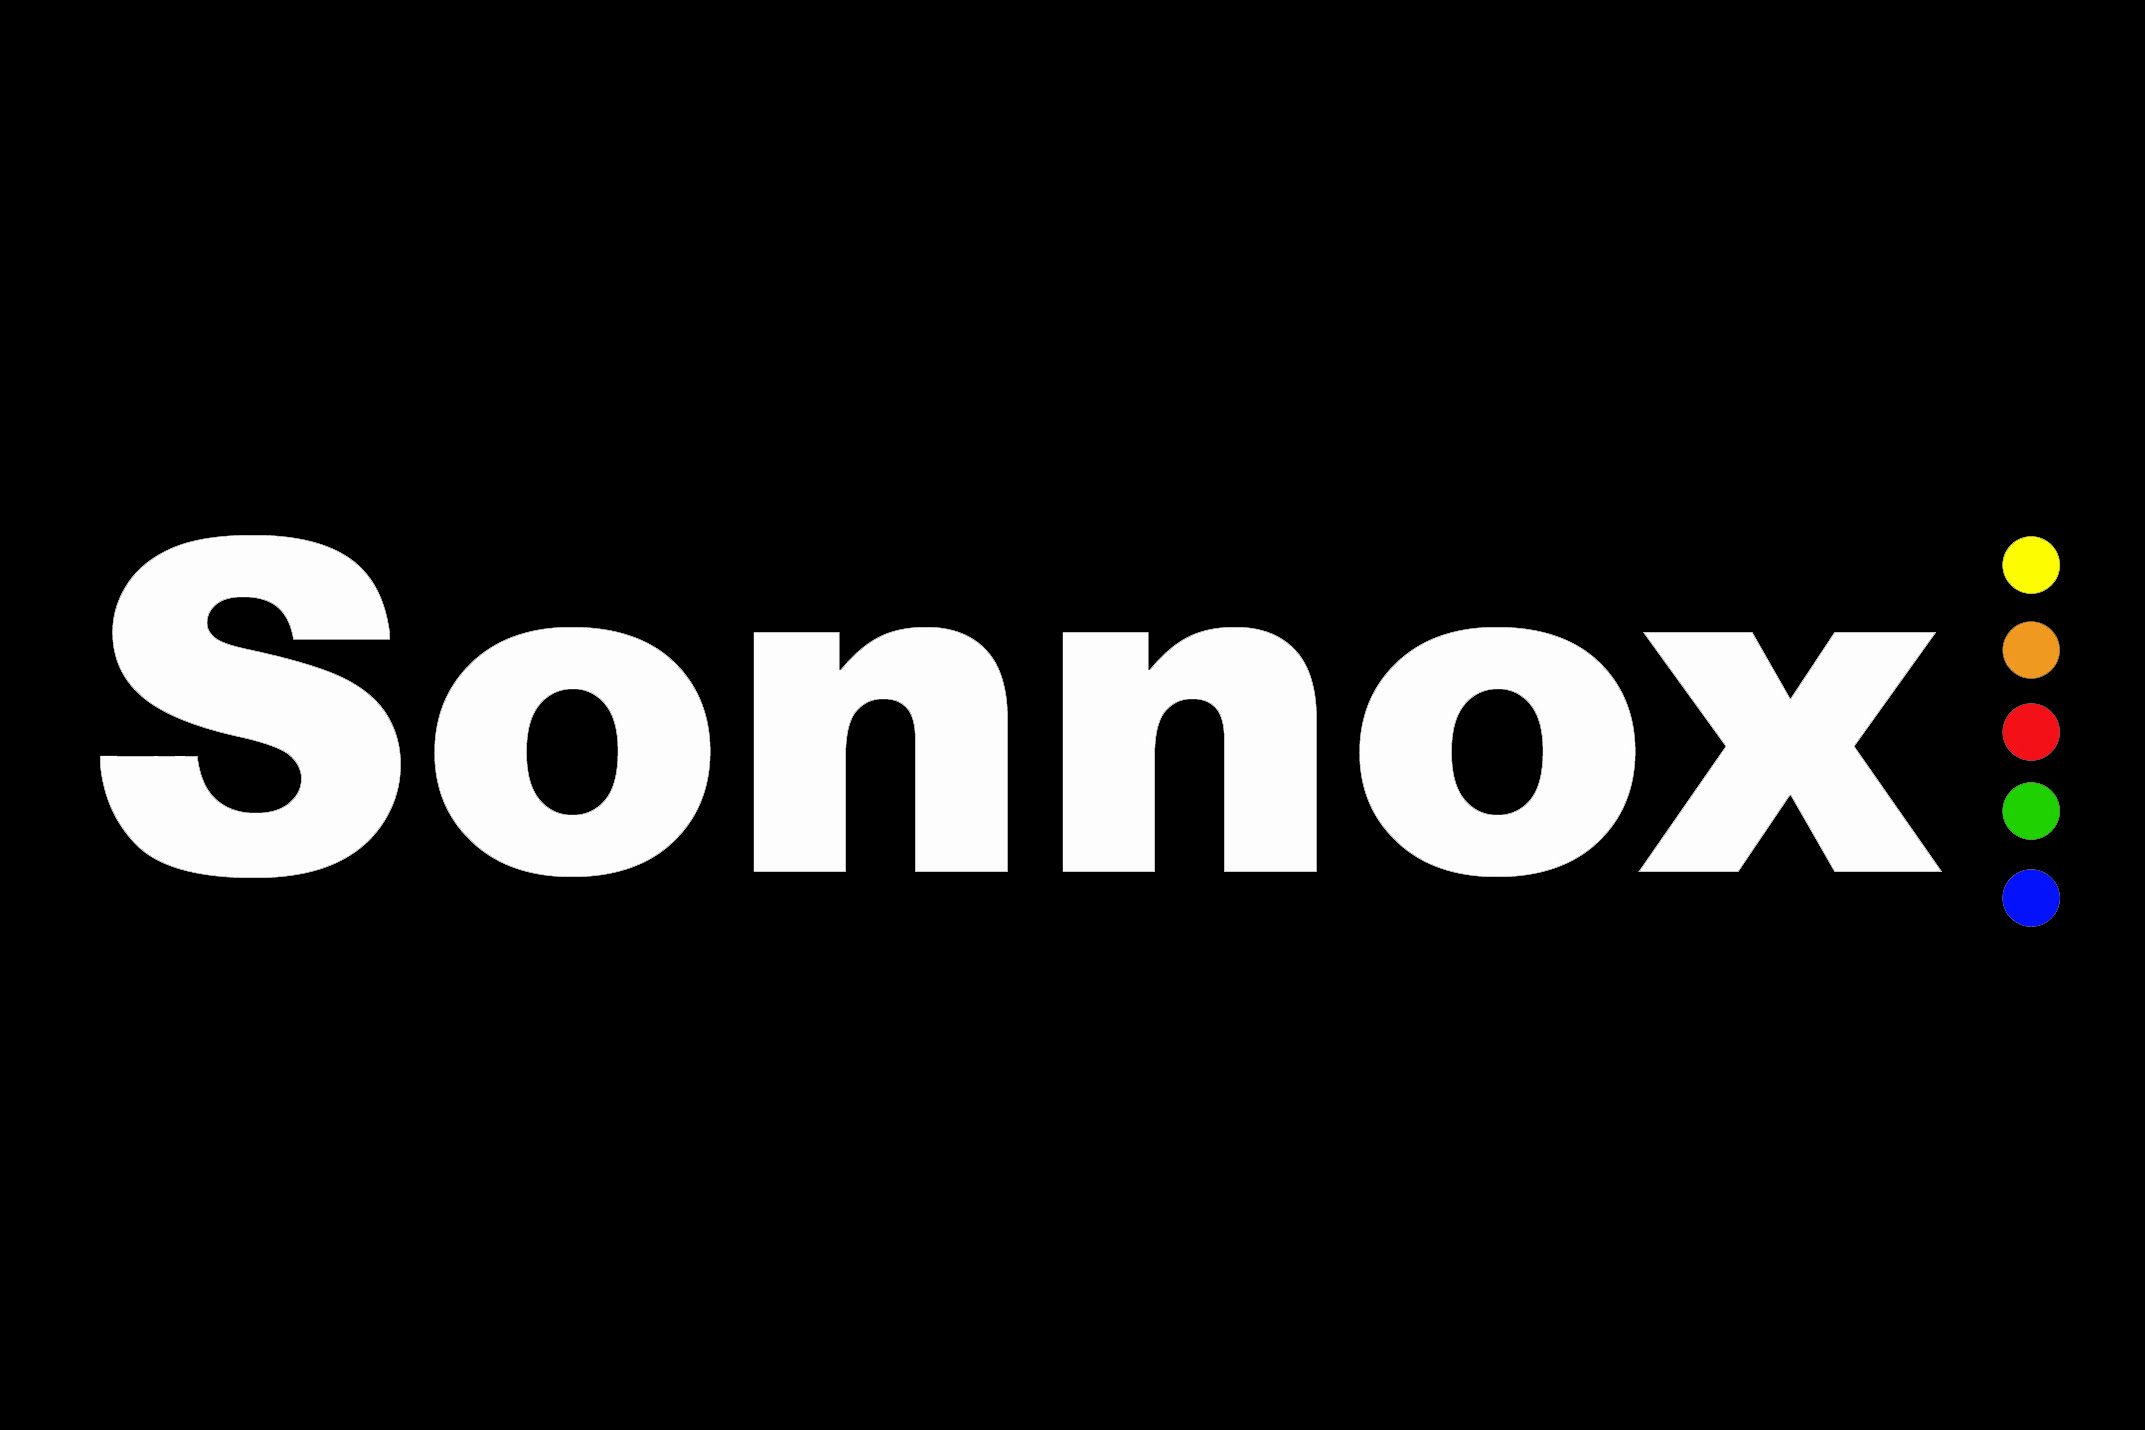 Sonnox – הטבות על פלאגינים לסטודנטים של BPM